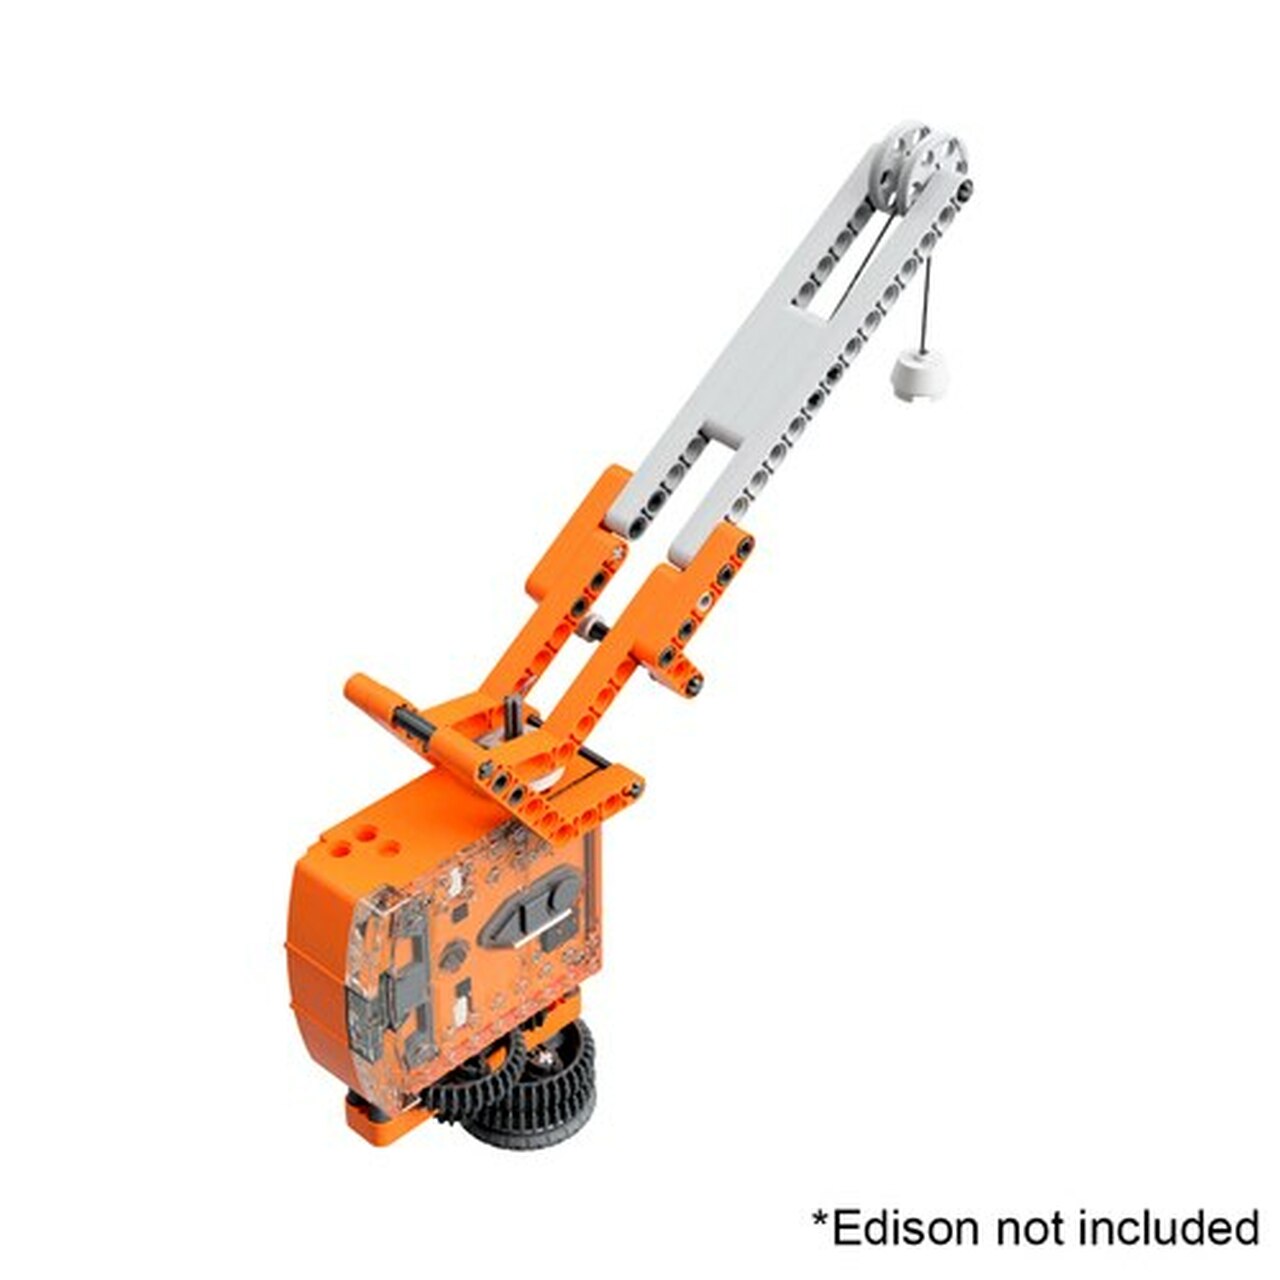 Edibot-C Robot Expansion Construction Kit - STEAM Education - ARVRedtech.com | AR & VR Education Technology